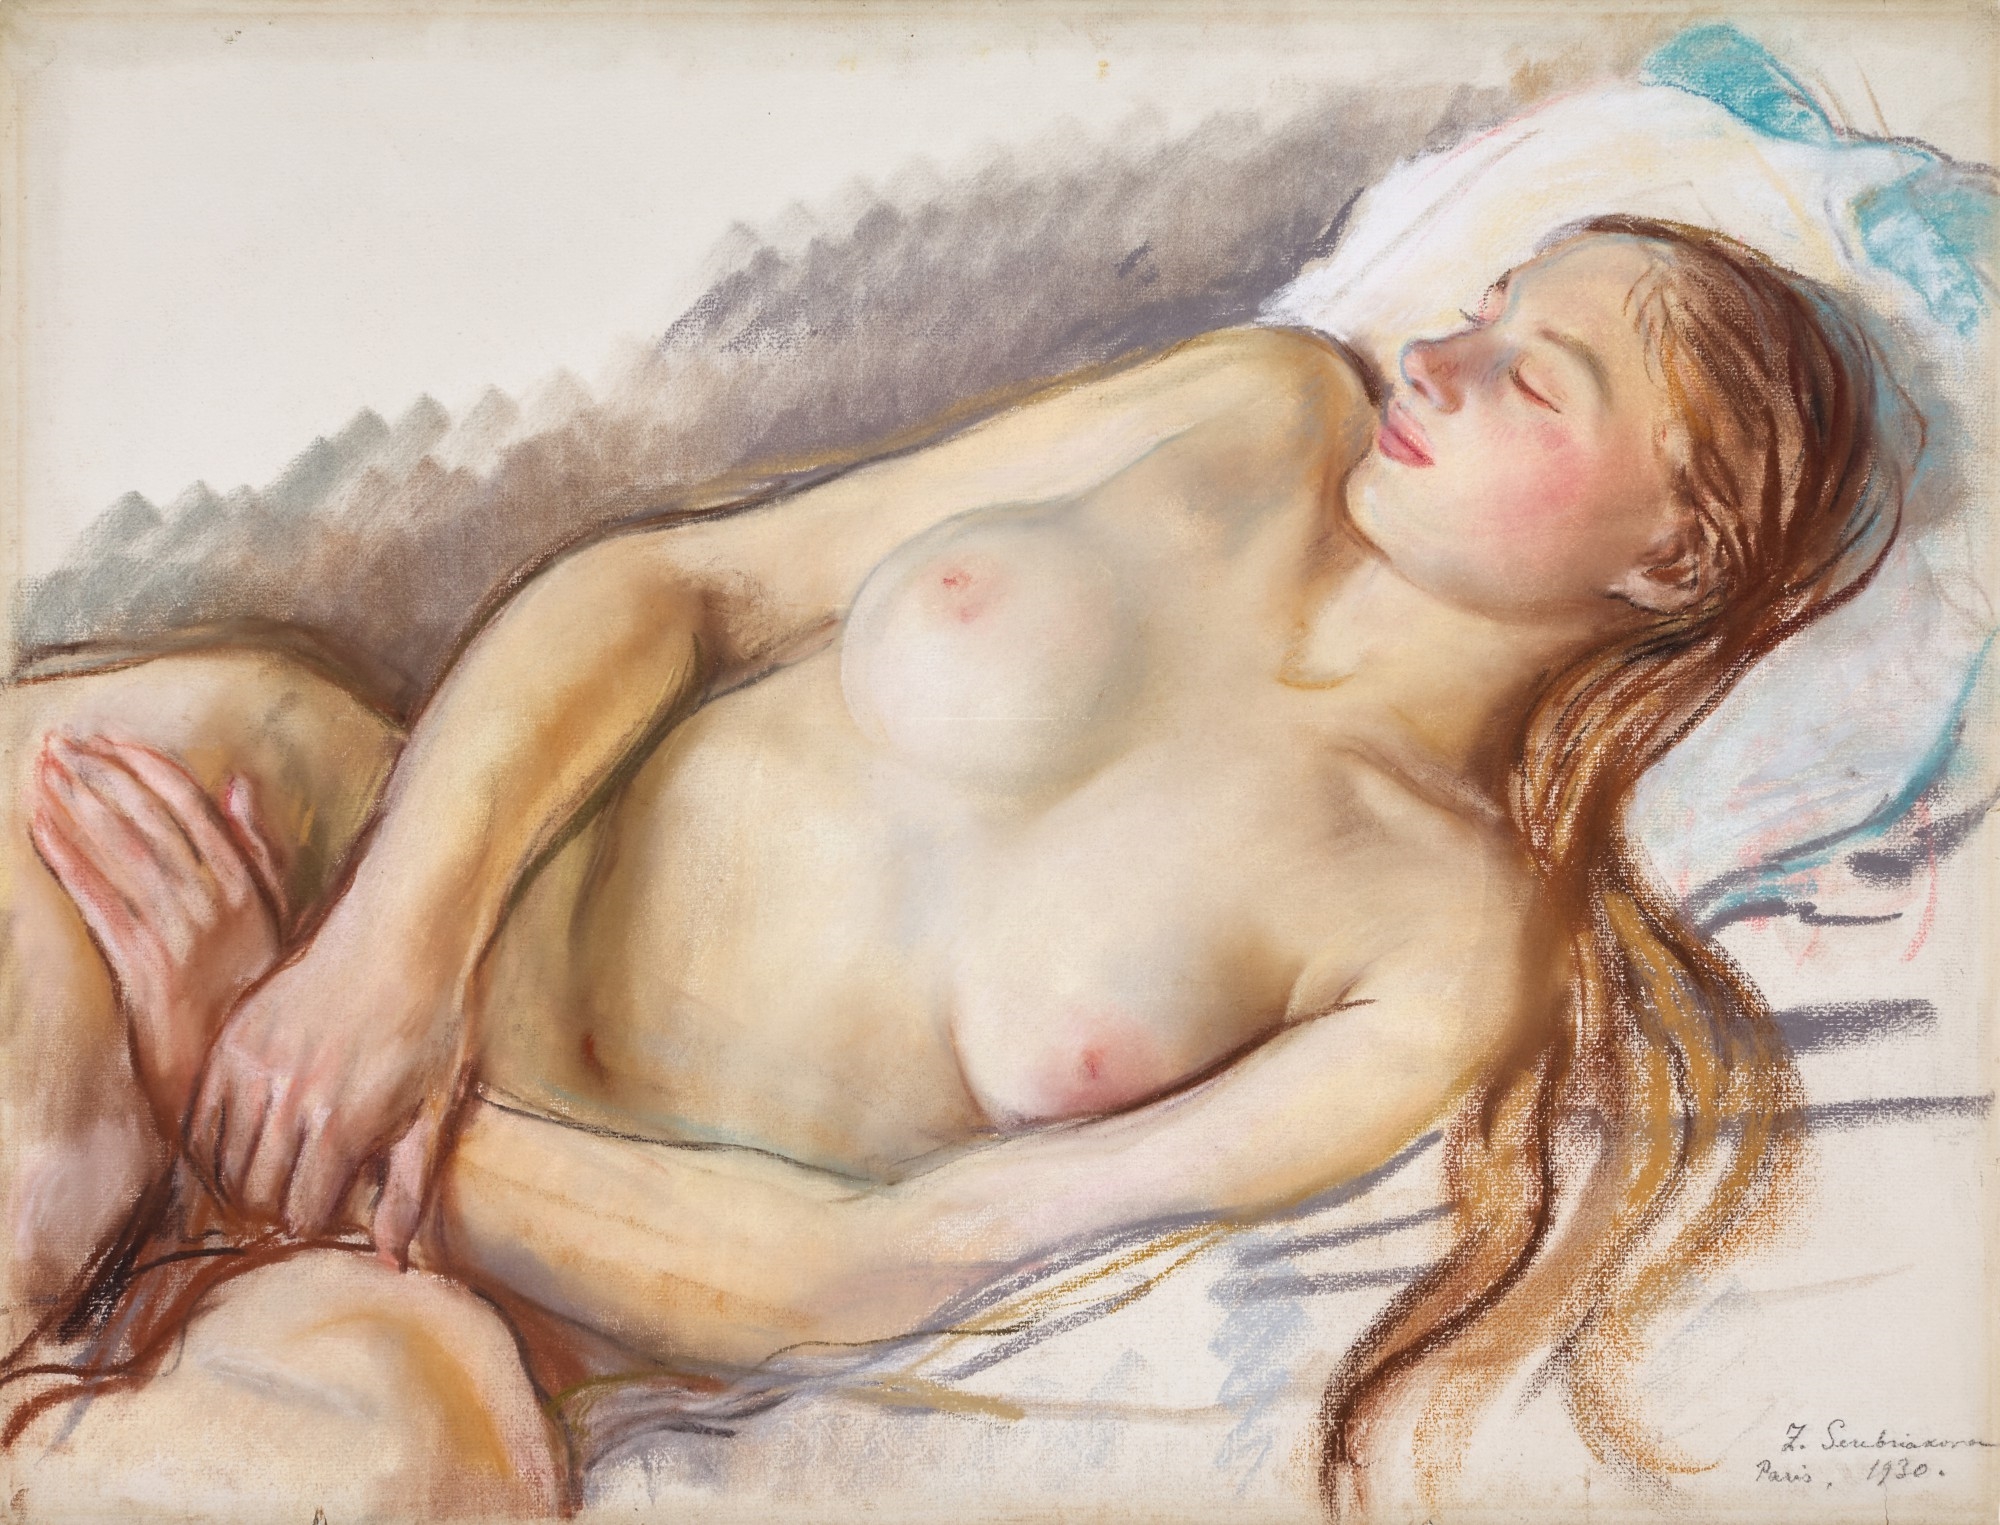 Nude by Zinaida Yevgenyevna Serebryakova, dated 1930